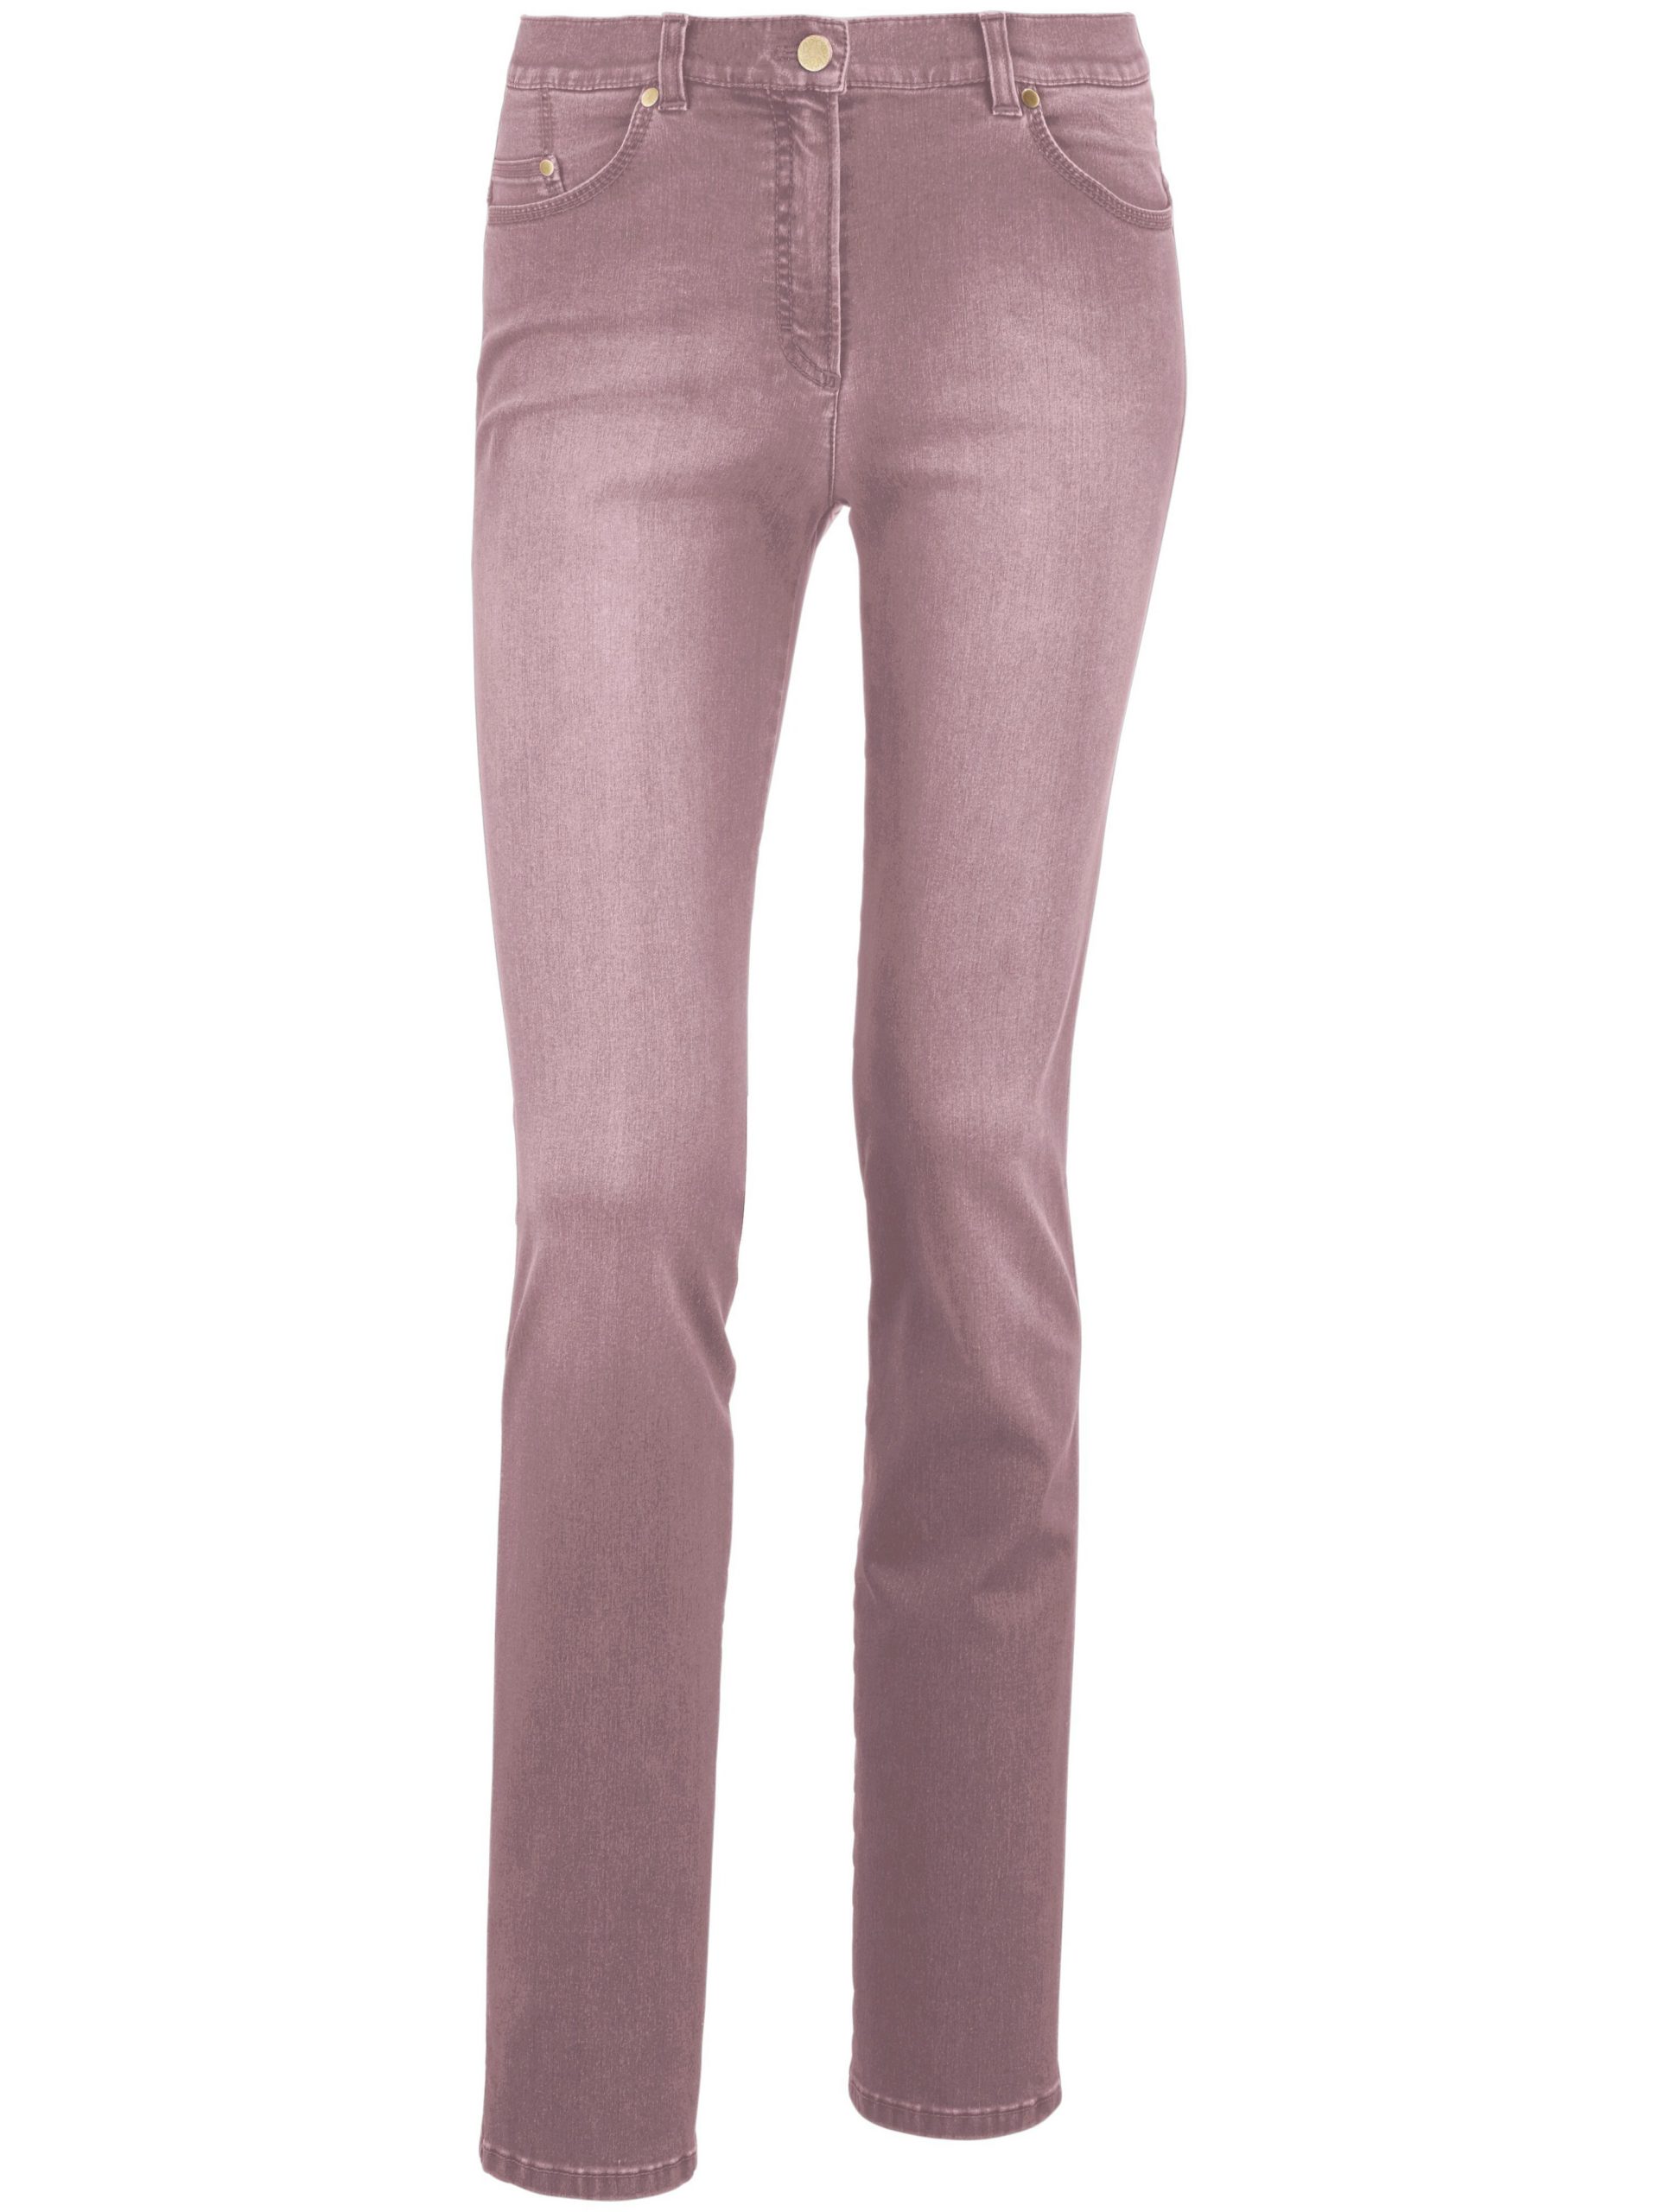 Corrigerende Proform S Super Slim-jeans model Lea Van Raphaela by Brax paars Kopen